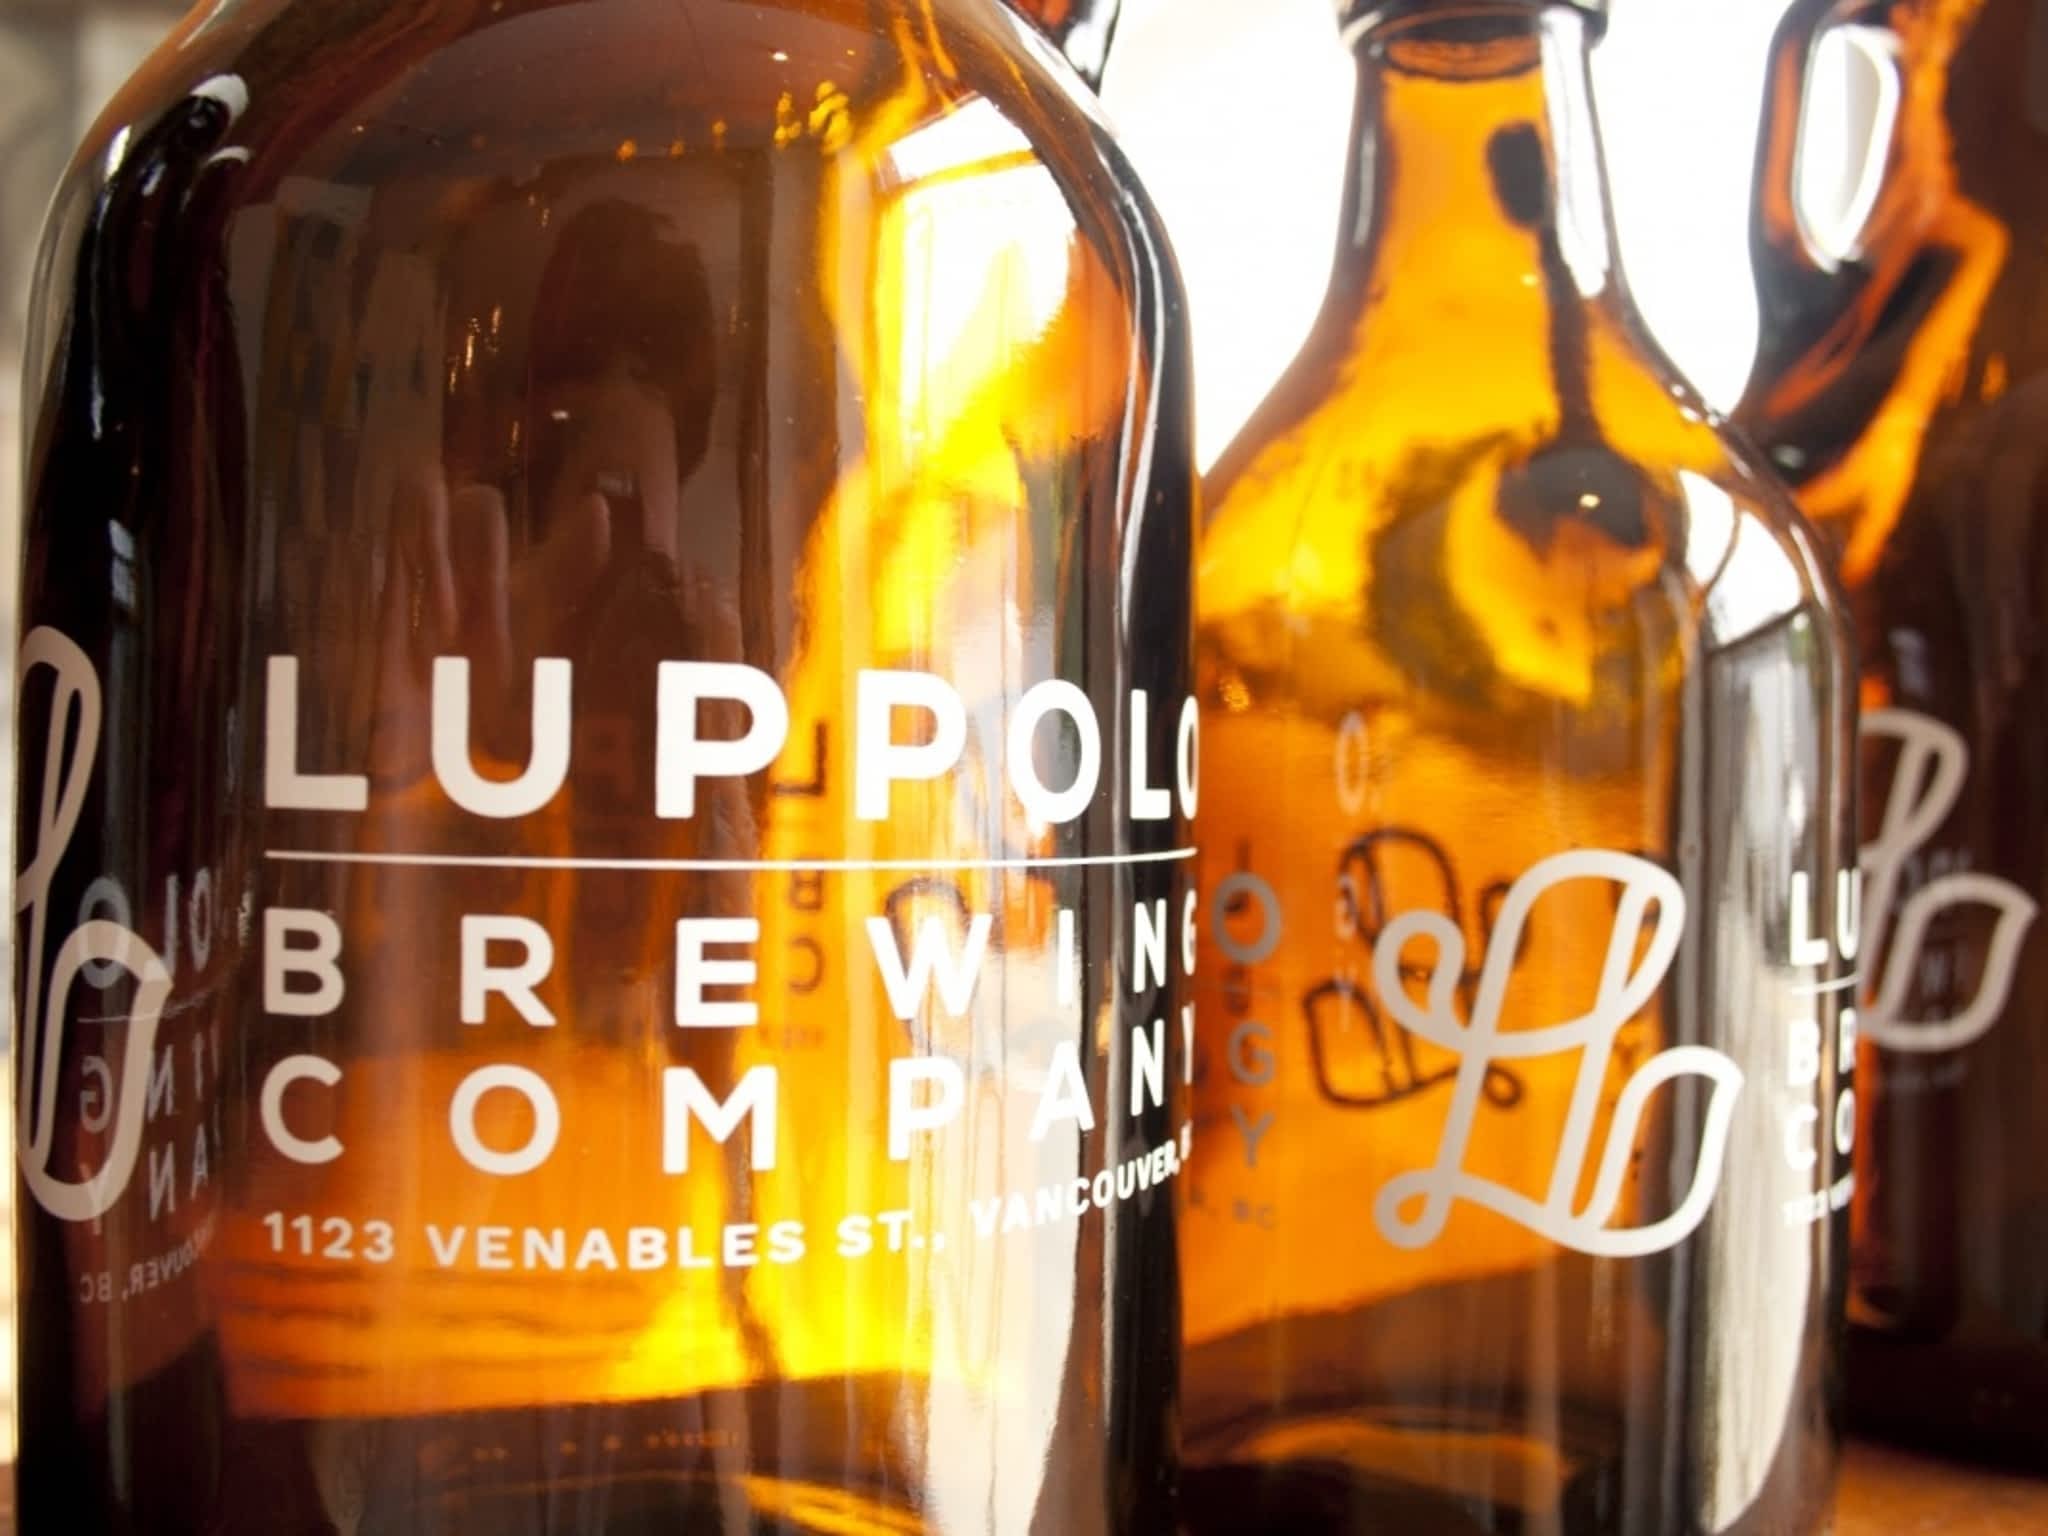 photo Luppolo Brewing Co Ltd